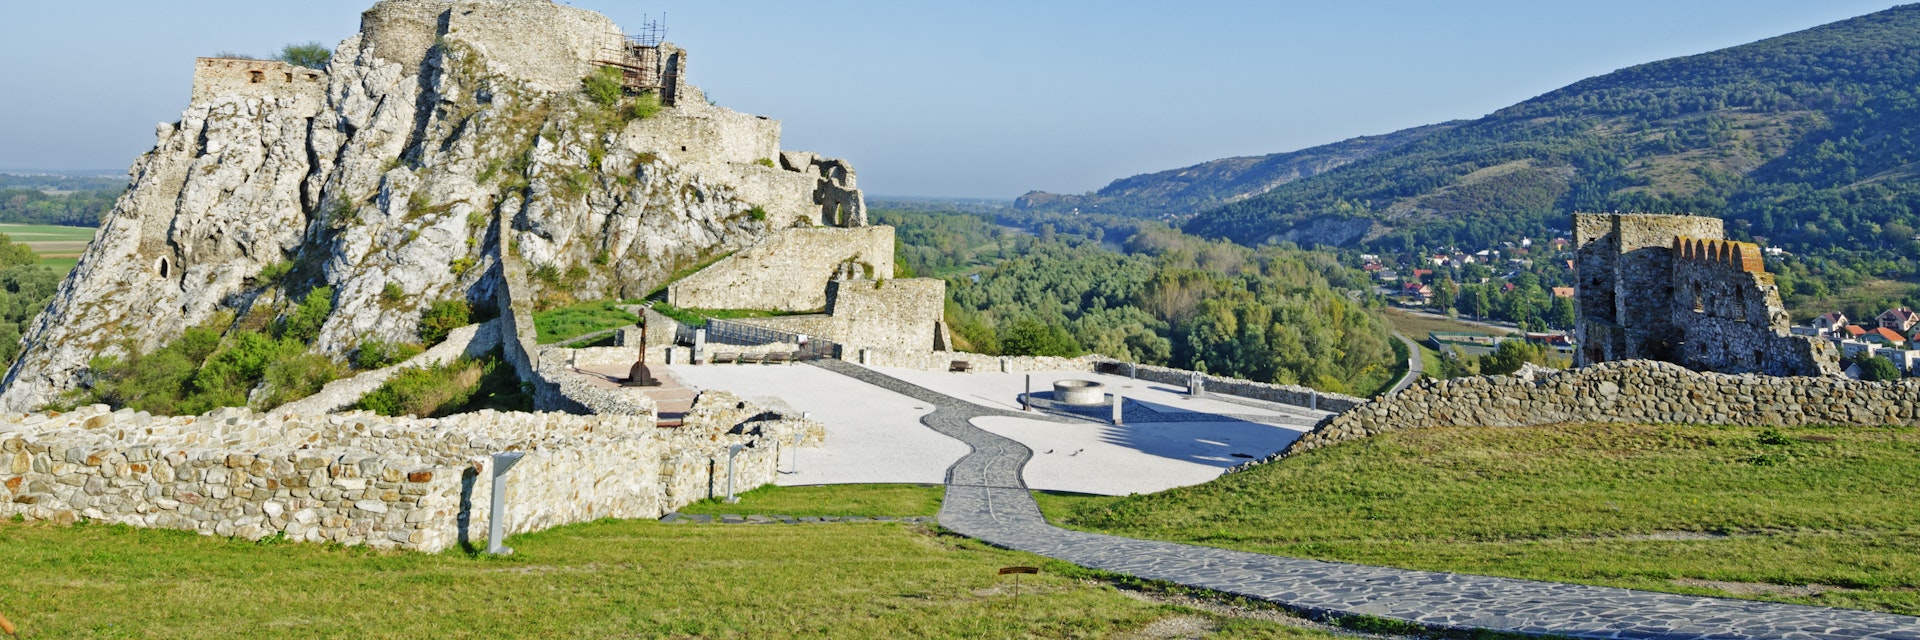 Ruins of Devin Castle, Danube River, Bratislava, Slovakia, Europe